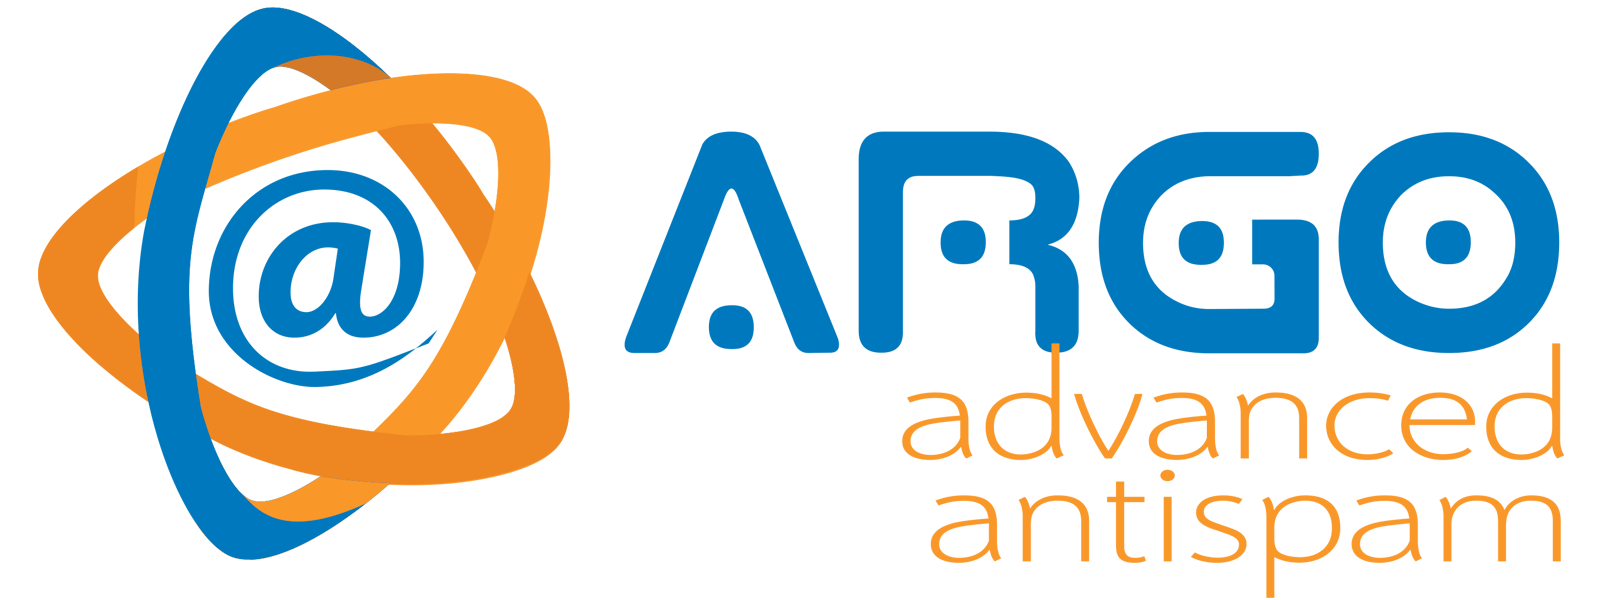 ARGO advanced antispam